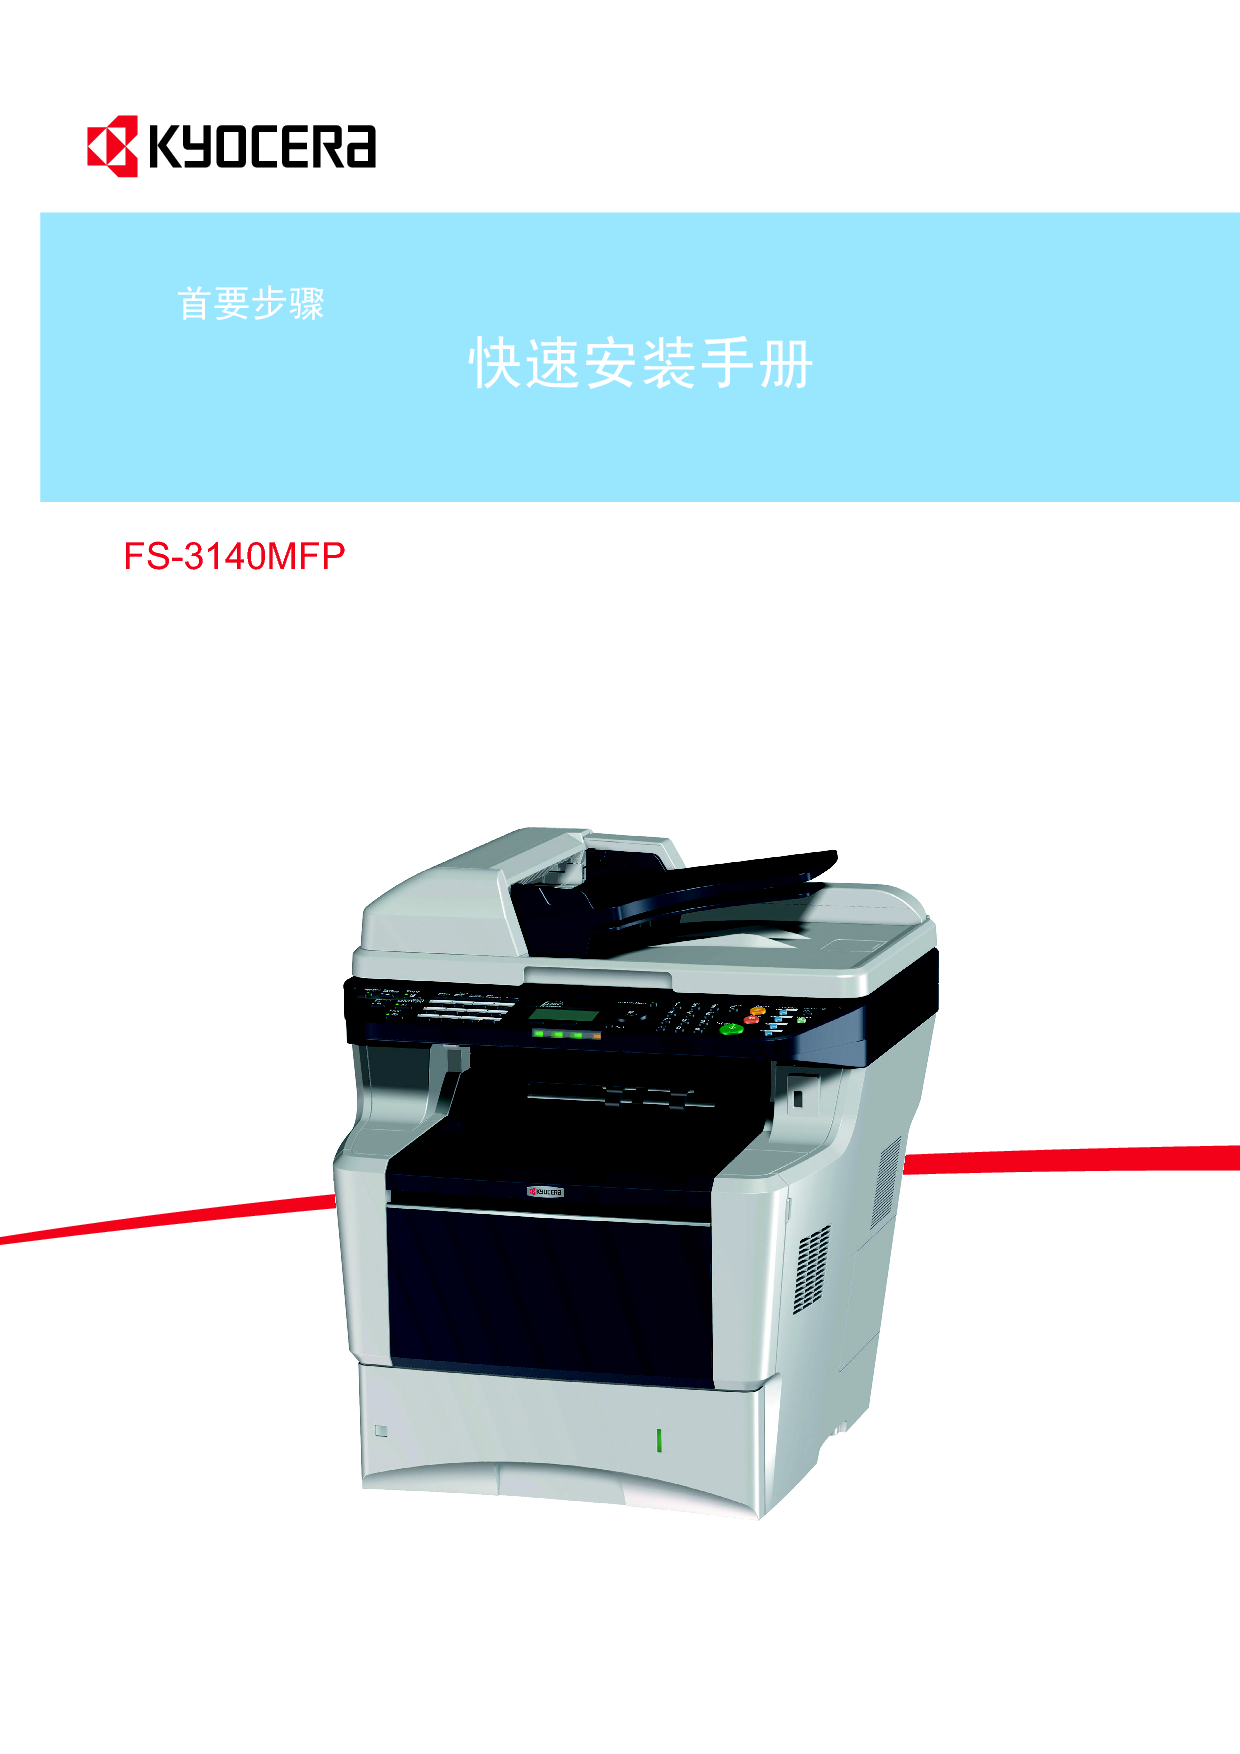 京瓷 Kyocera FS-3410MFP 操作手册 封面